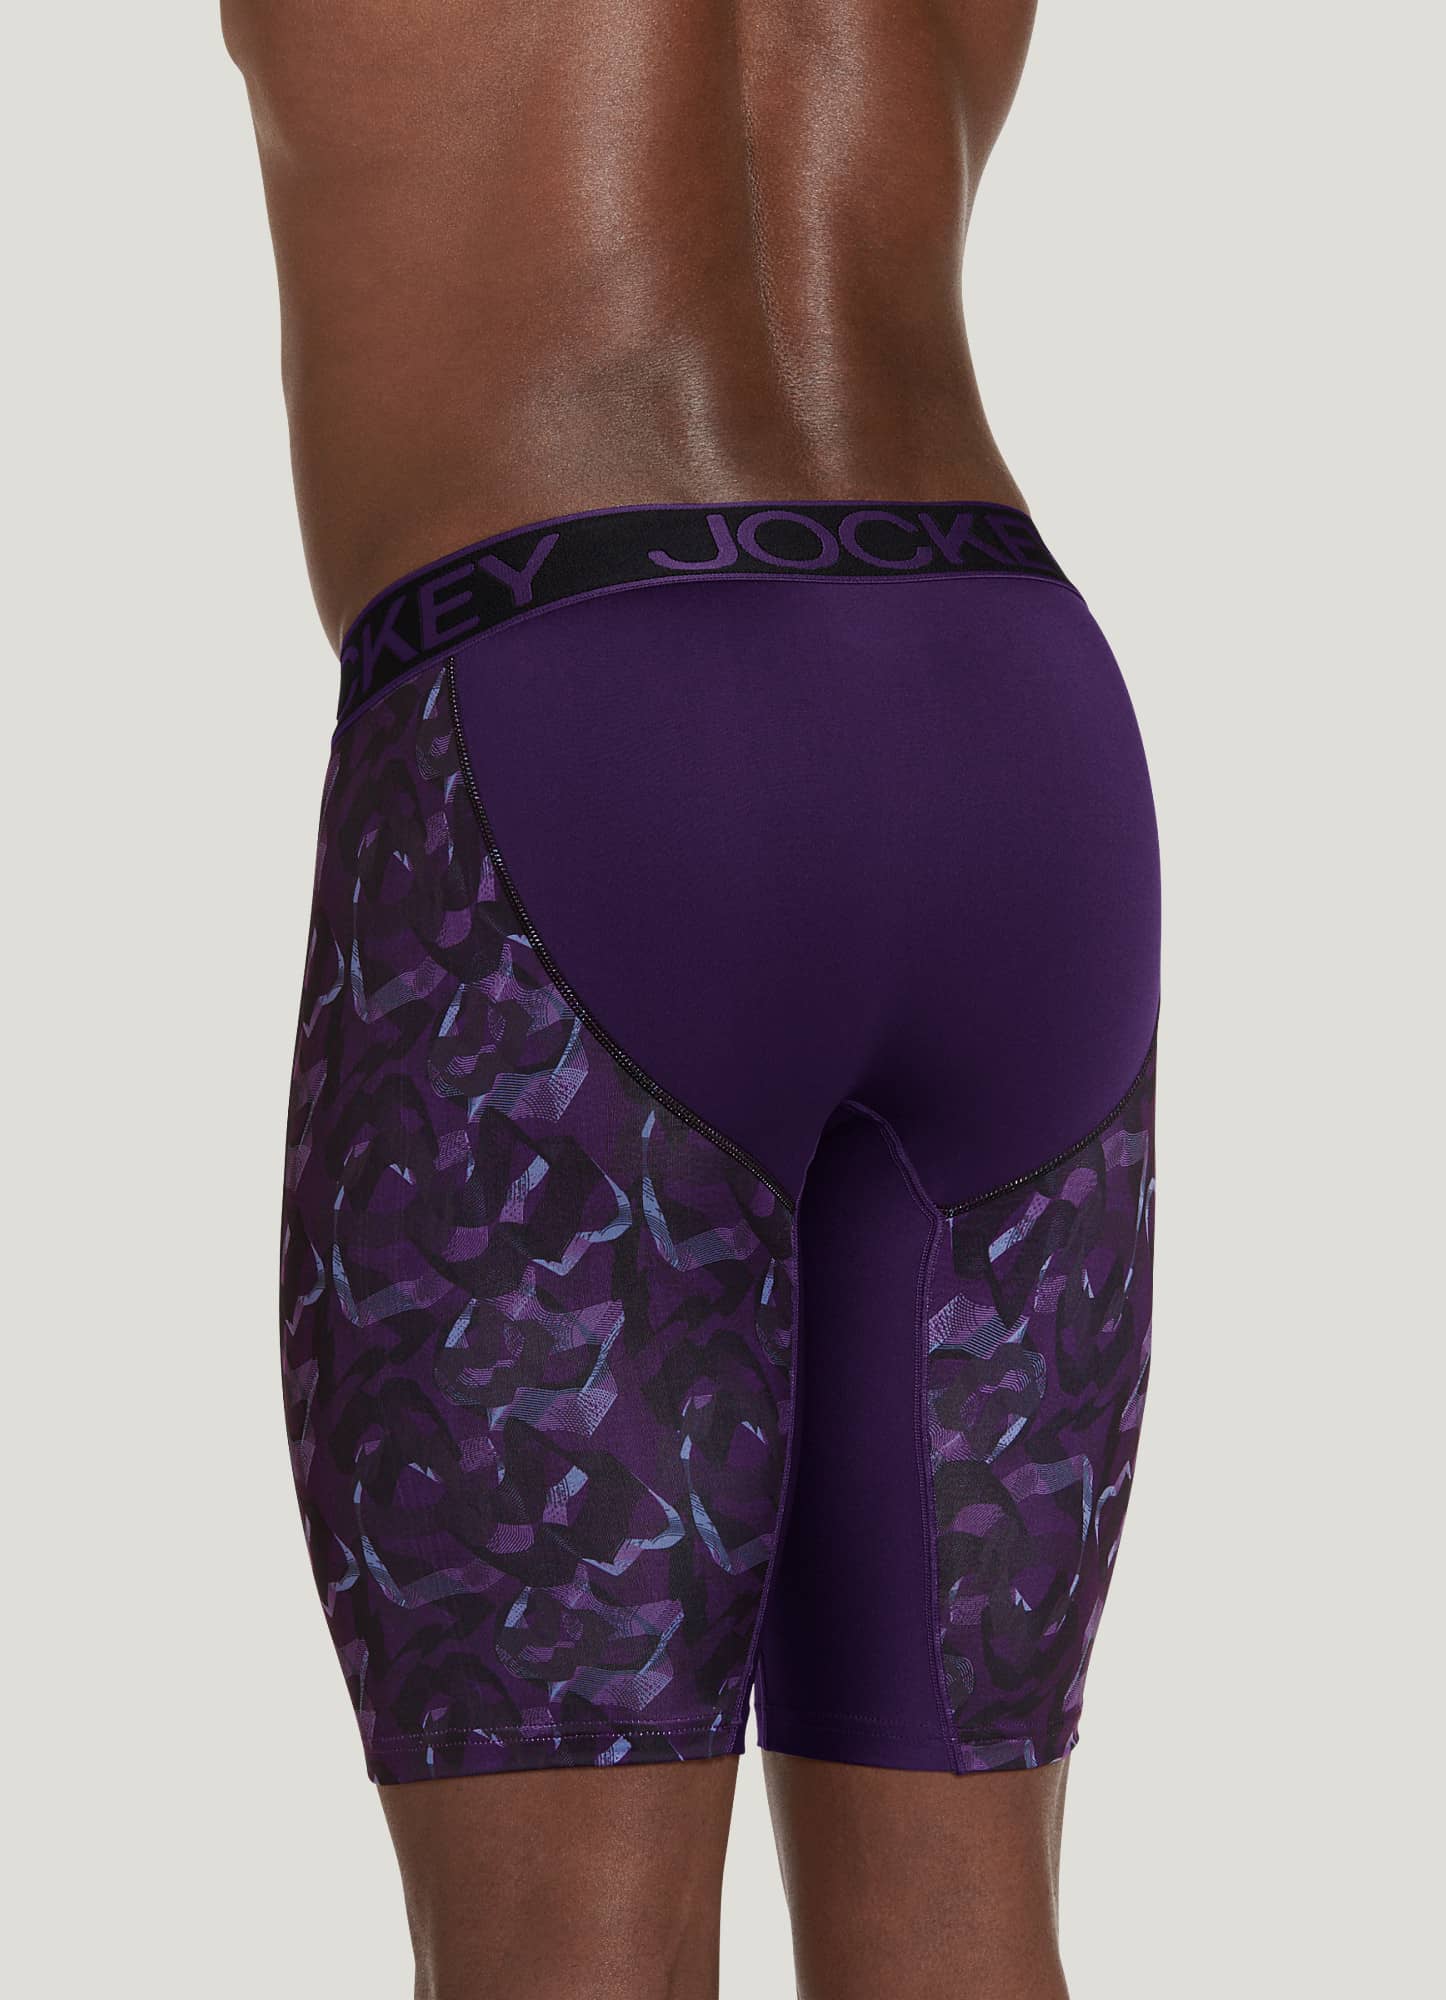 Jockey Men's Underwear Sport Cooling Mesh Performance Brief, Purple, M at   Men's Clothing store